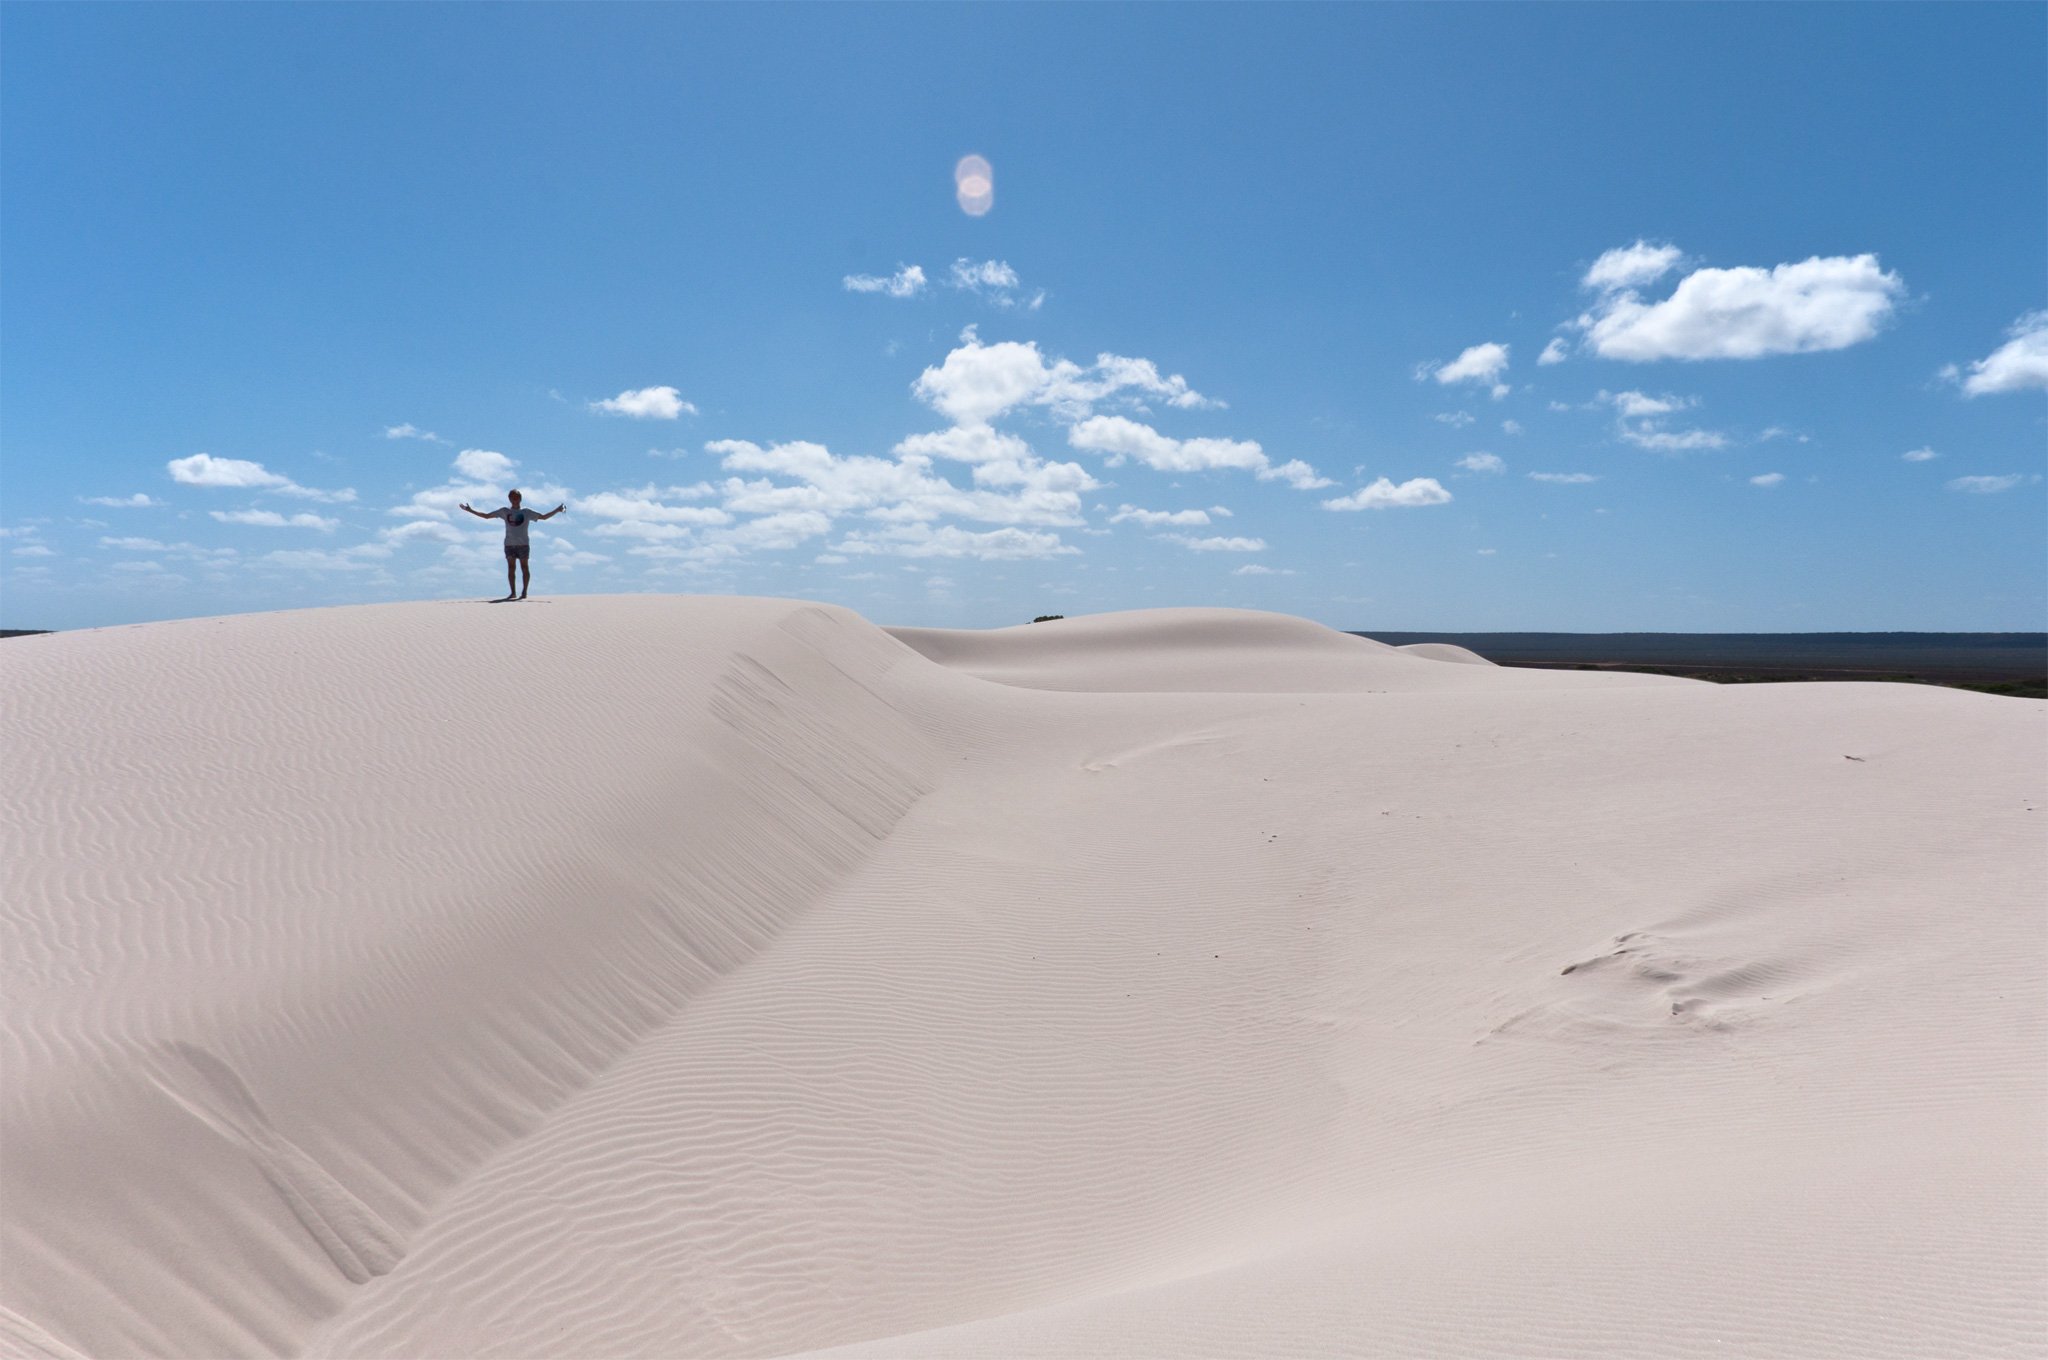 Gerolf on top of the Eucla dunes - Герольф на вершине дюн Юклы